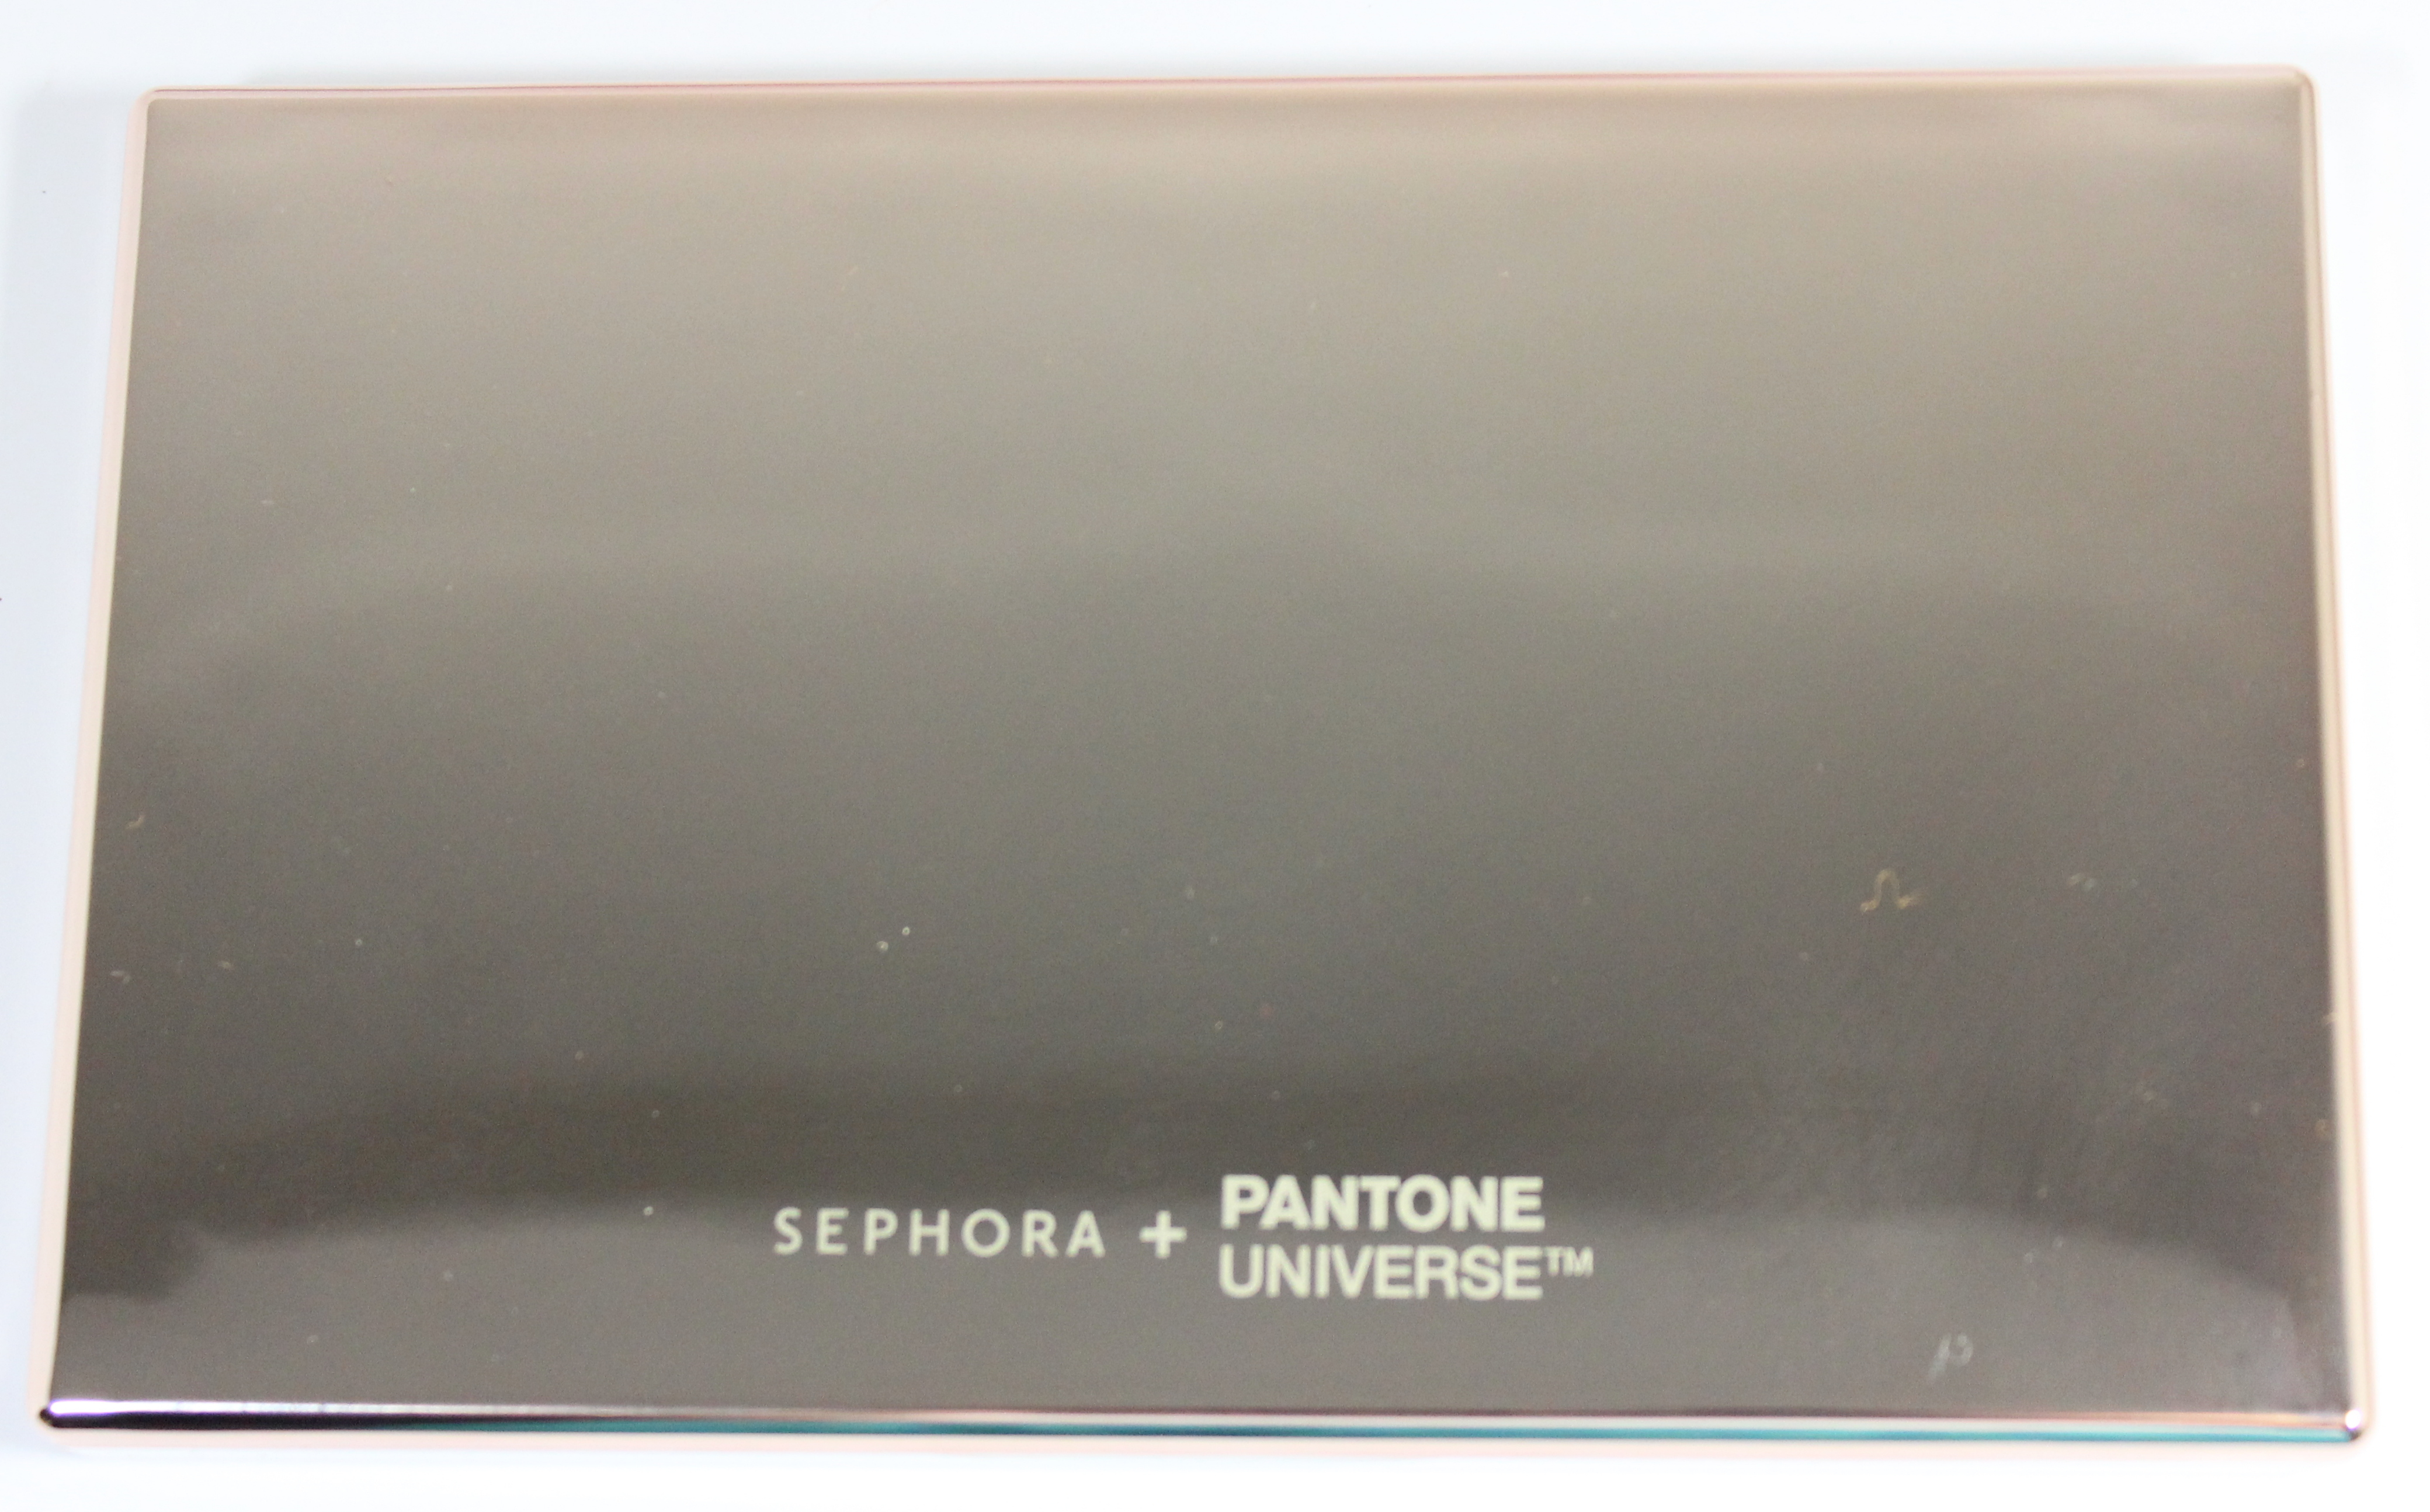 Sephora + Pantone Universe Deep Taupe Eyeshadow Review & Swatches